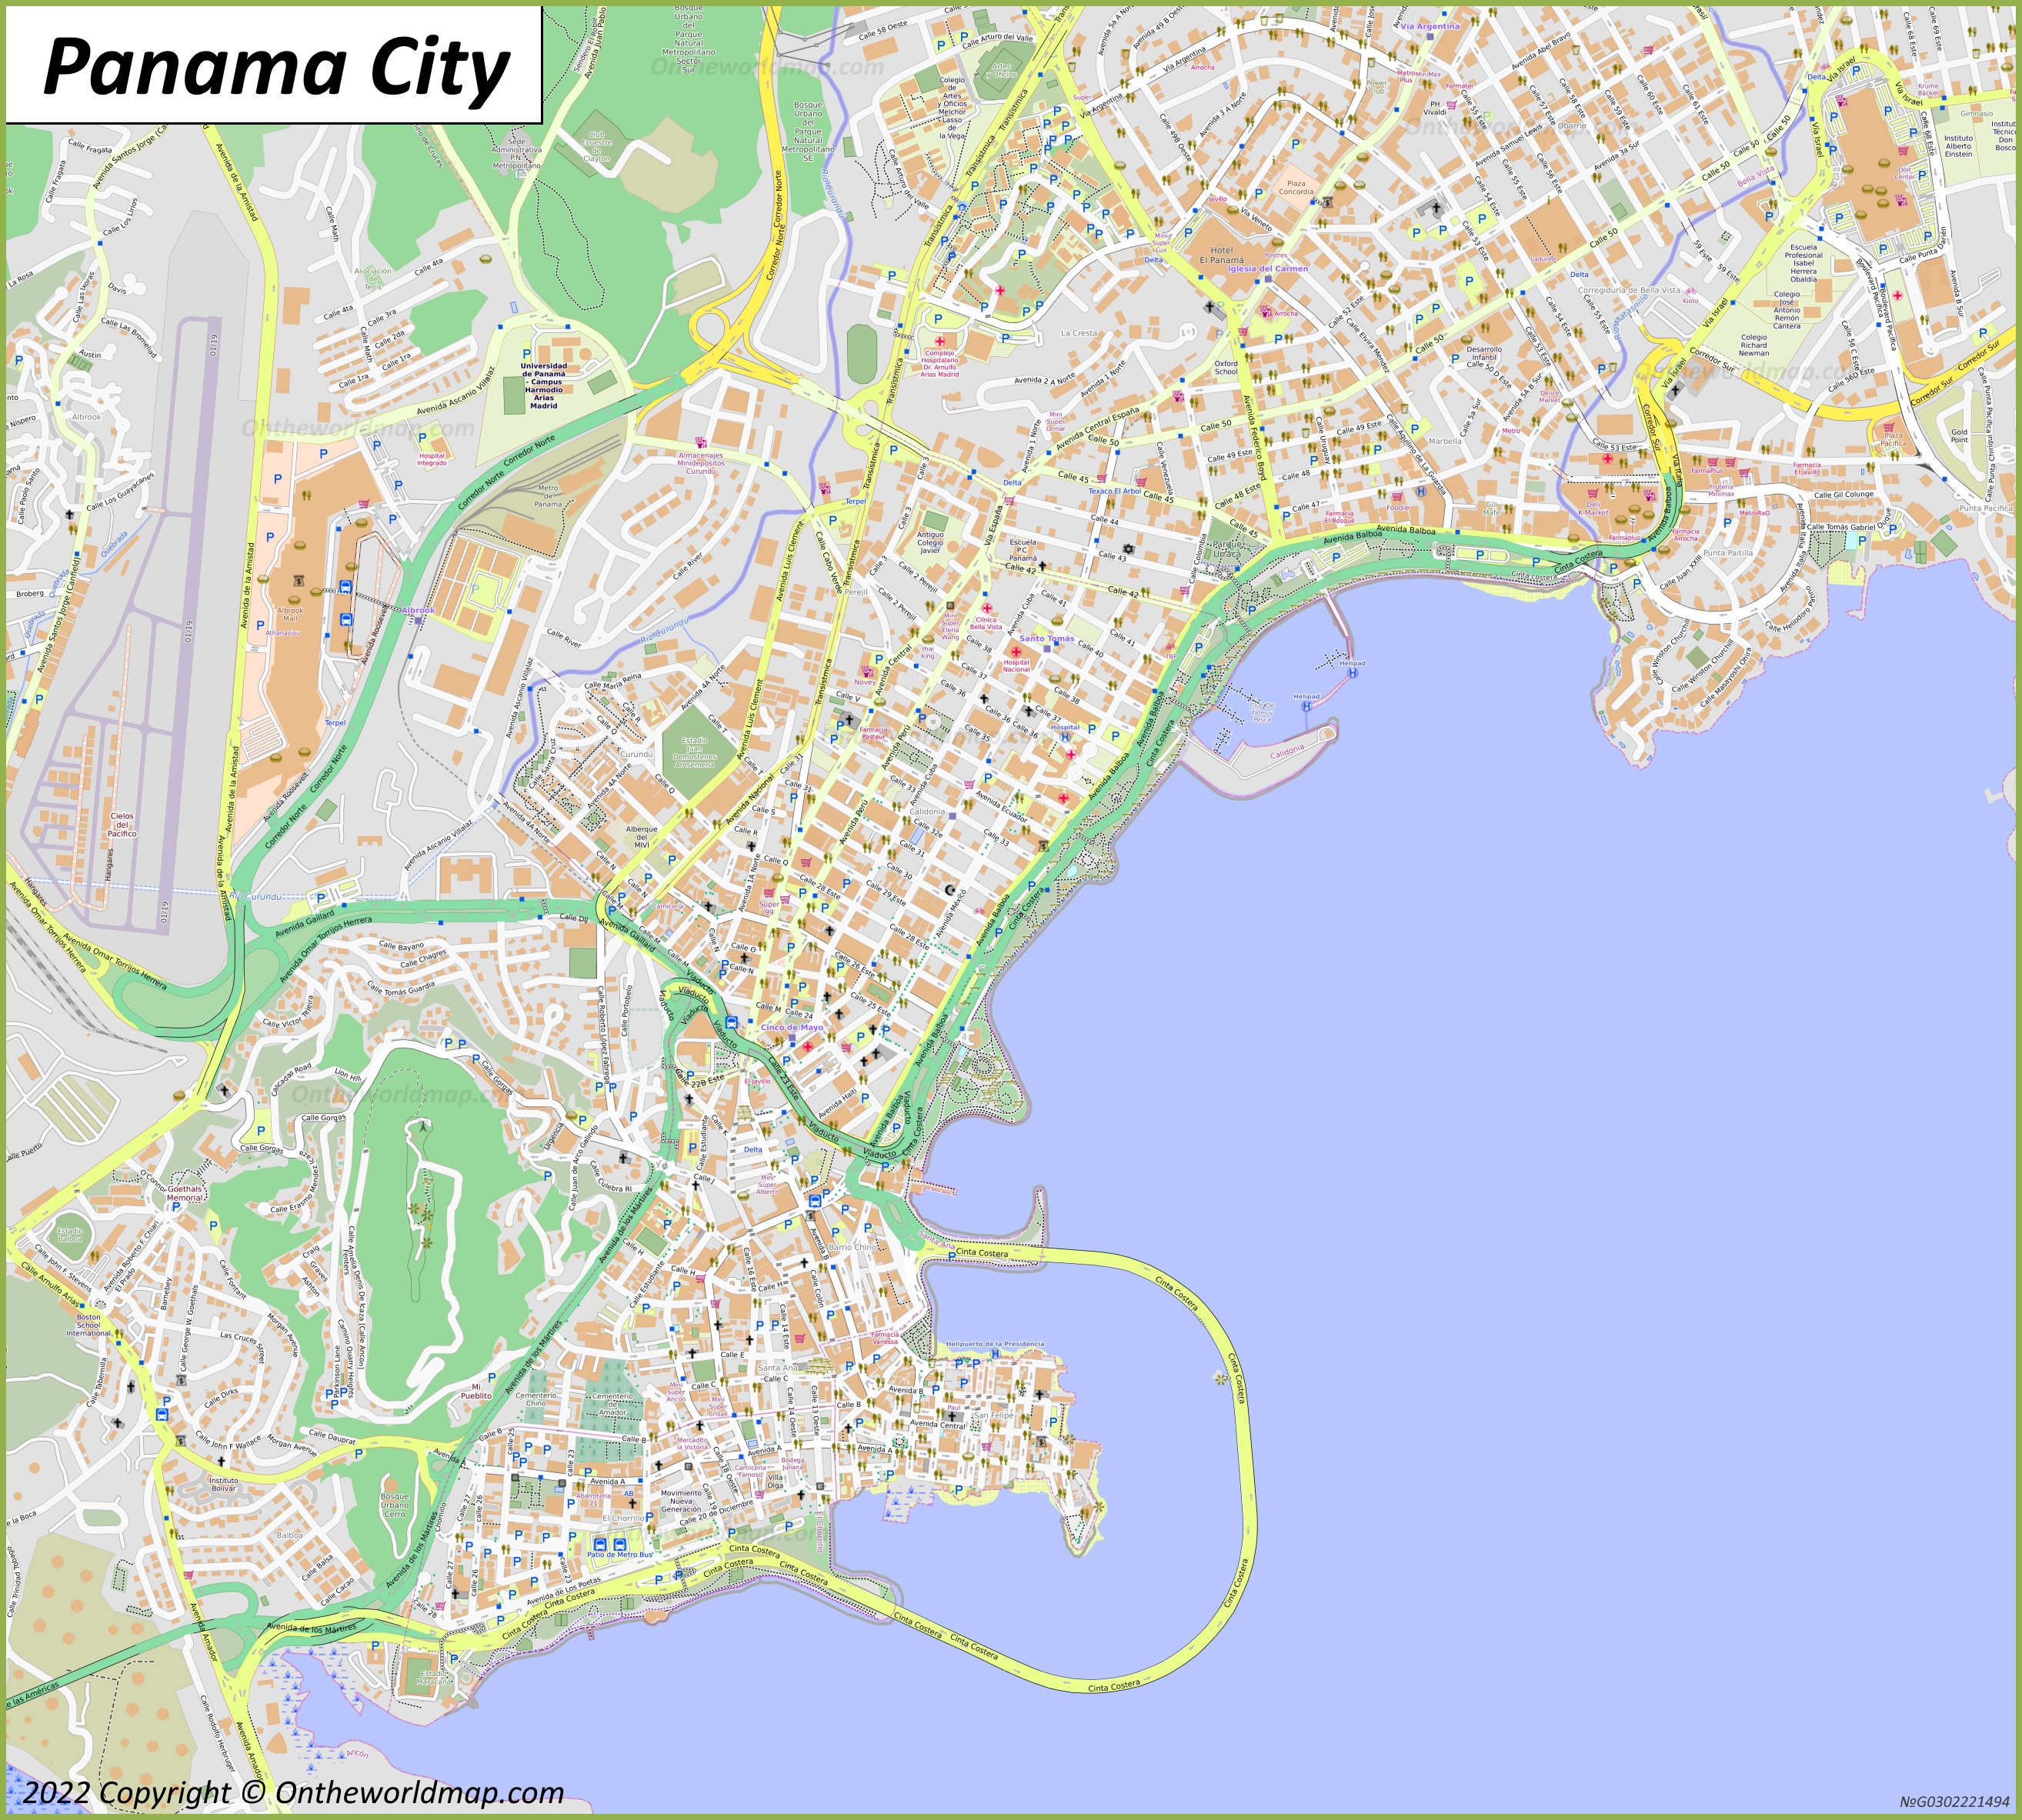 Panama City City Centre Map